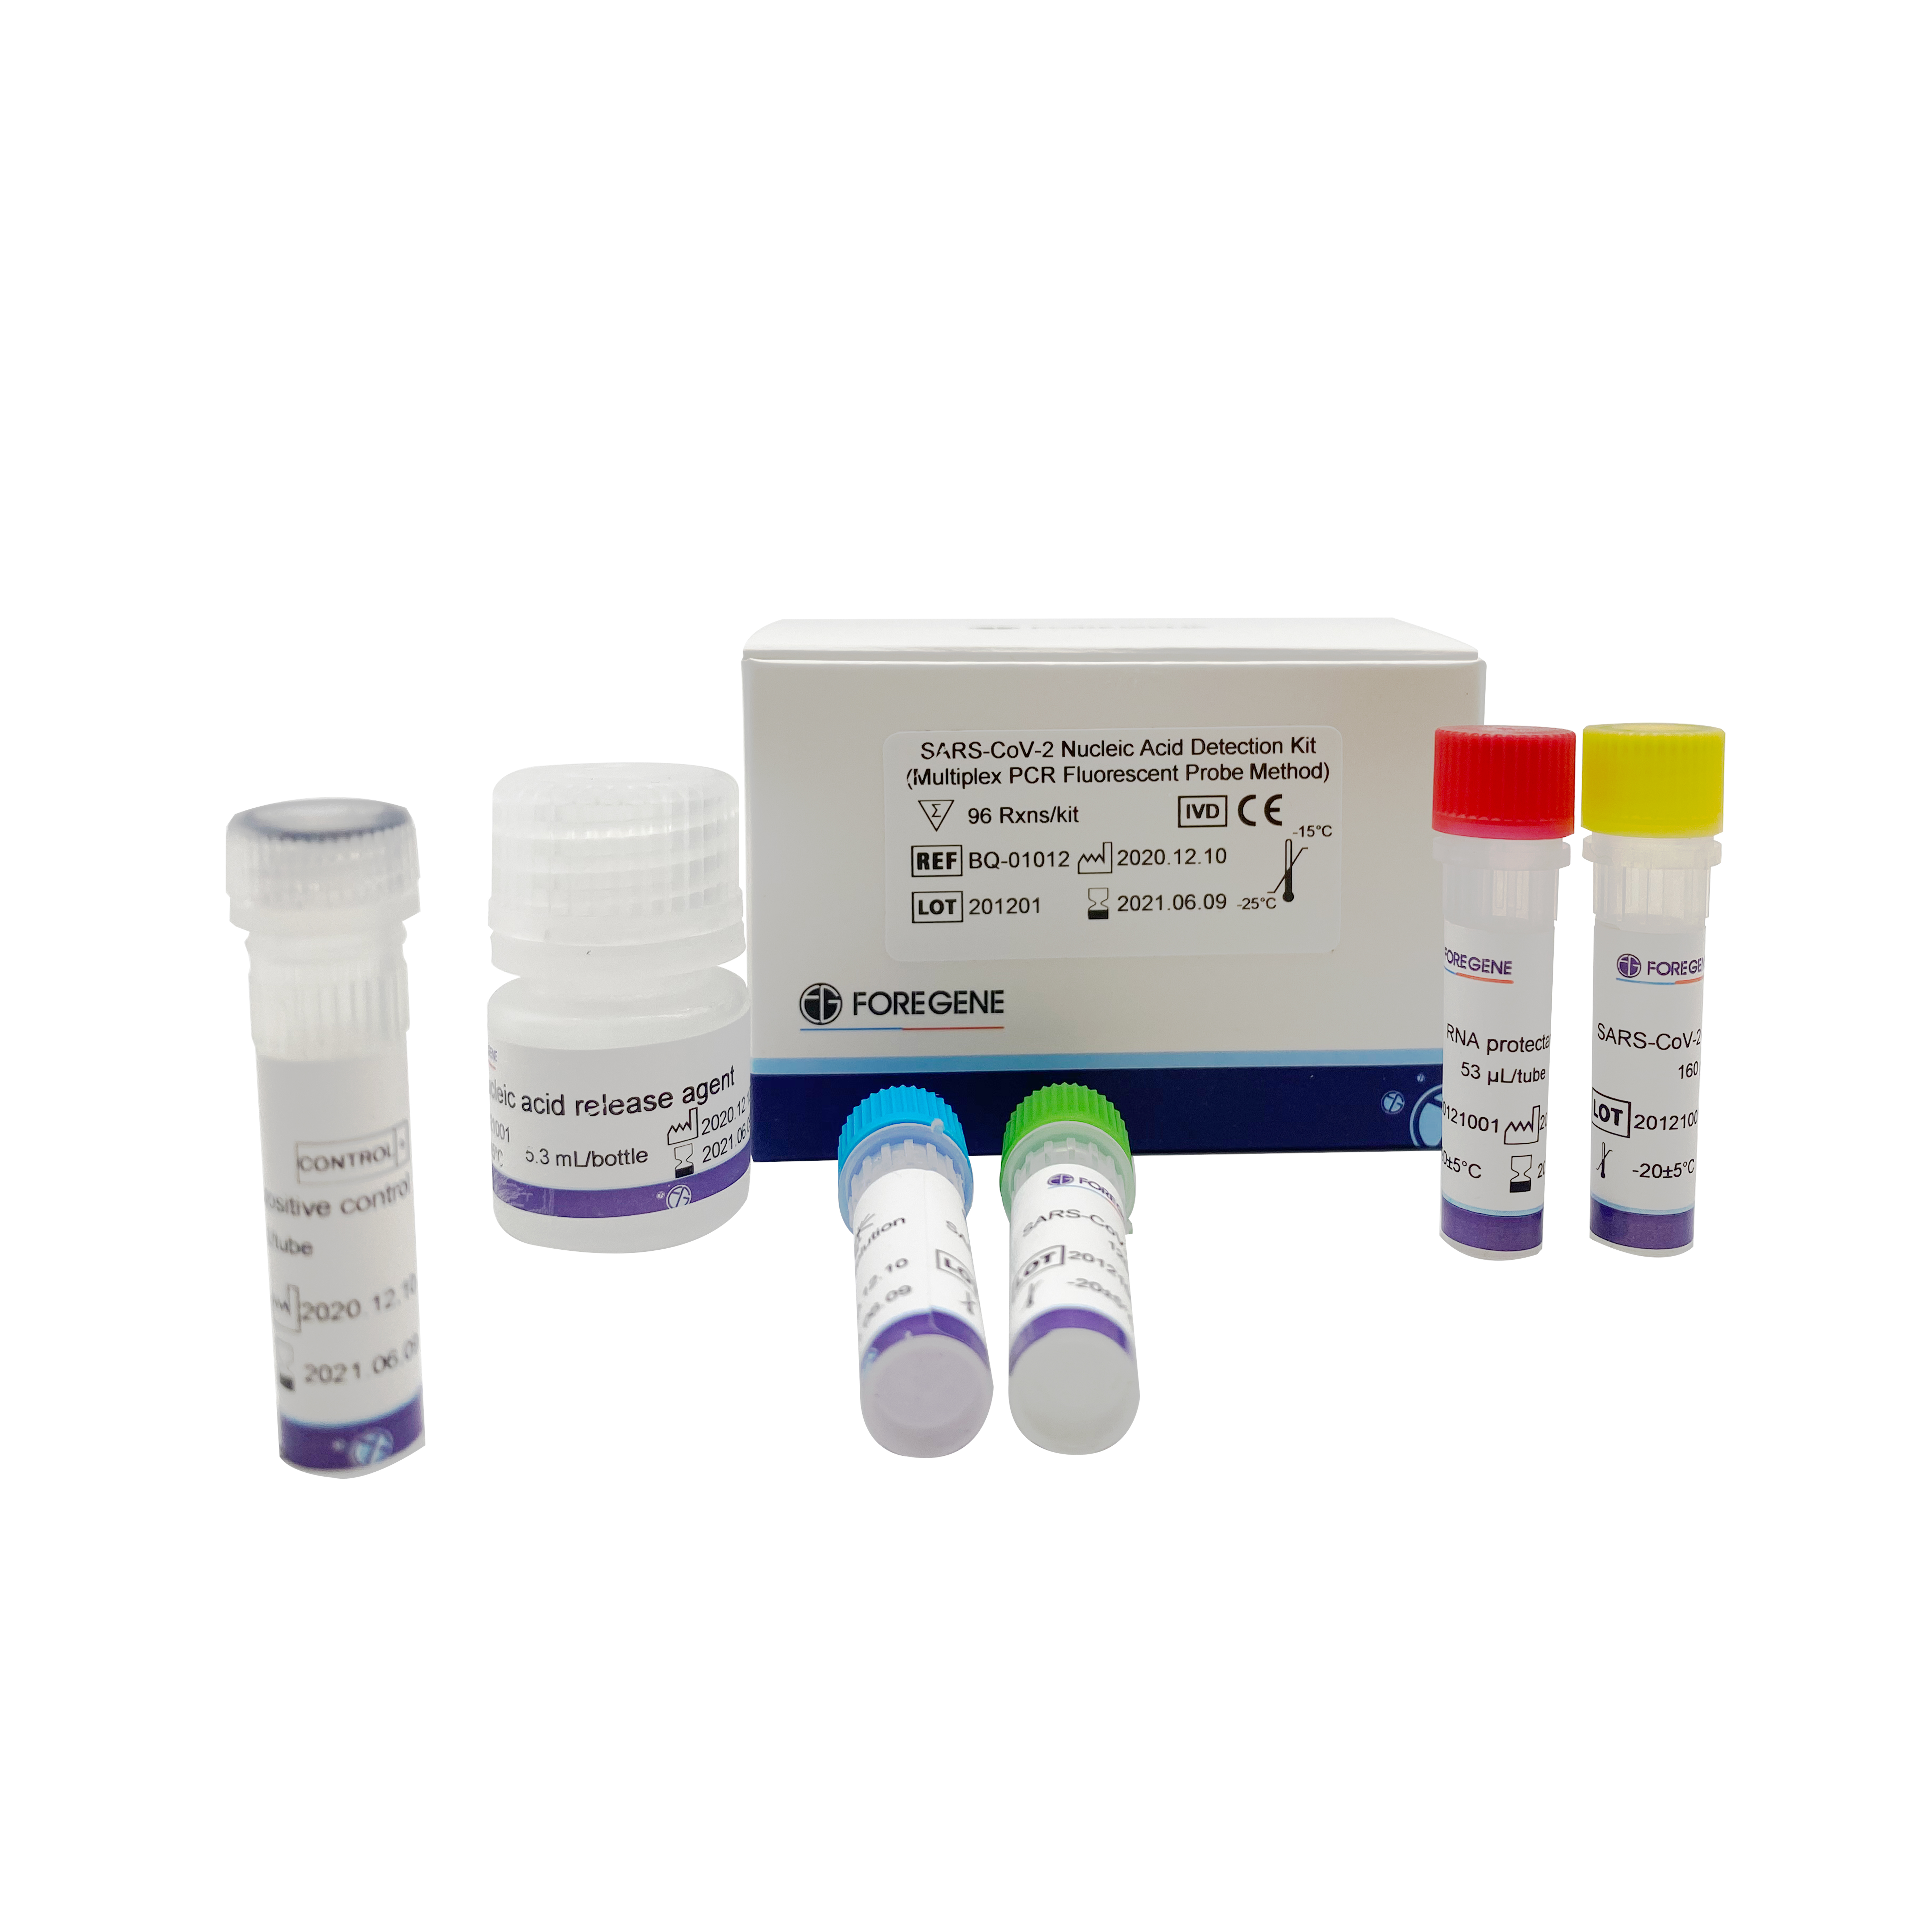 COVID-19 nucleic acid detection kit